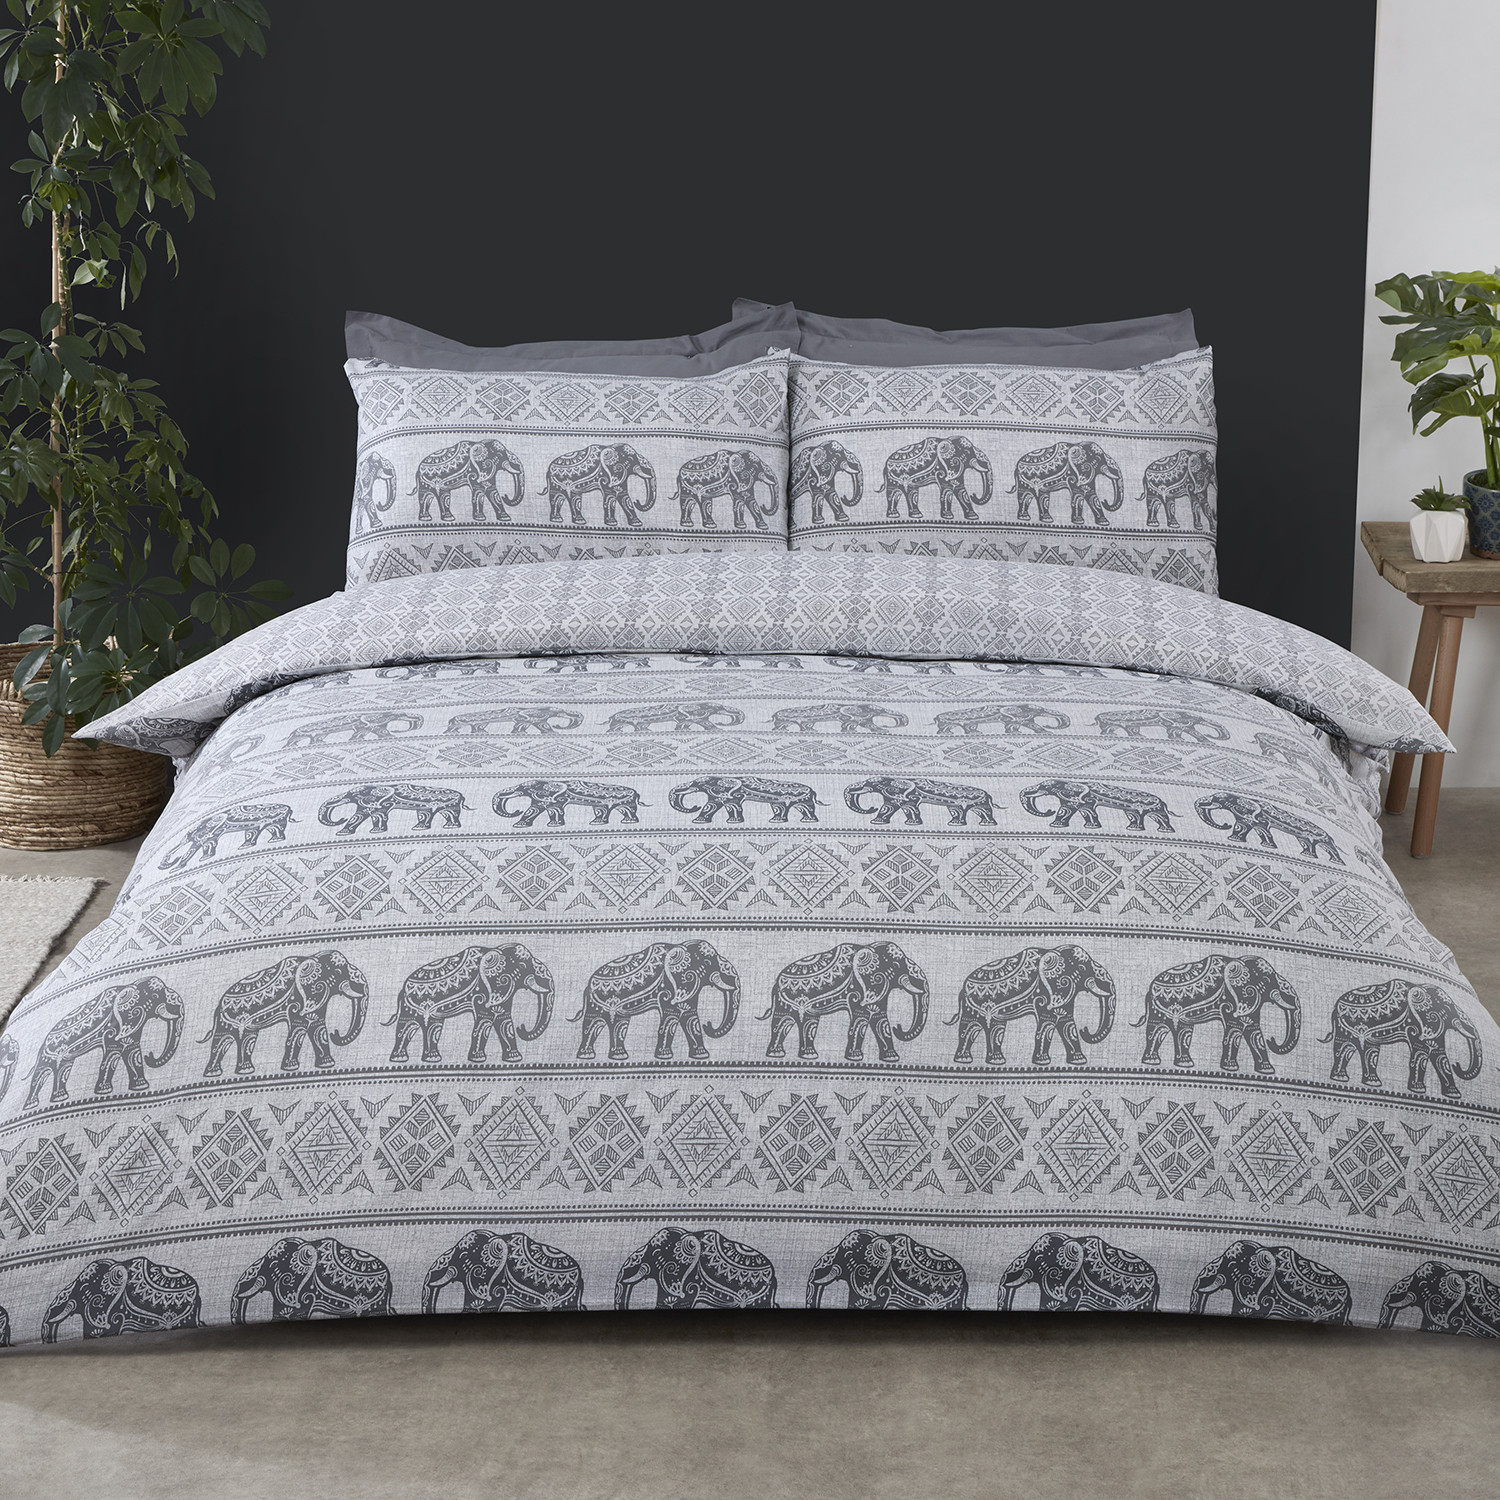 My Home King Hathi Elephant Duvet Cover and Pillowcase Set Image 1